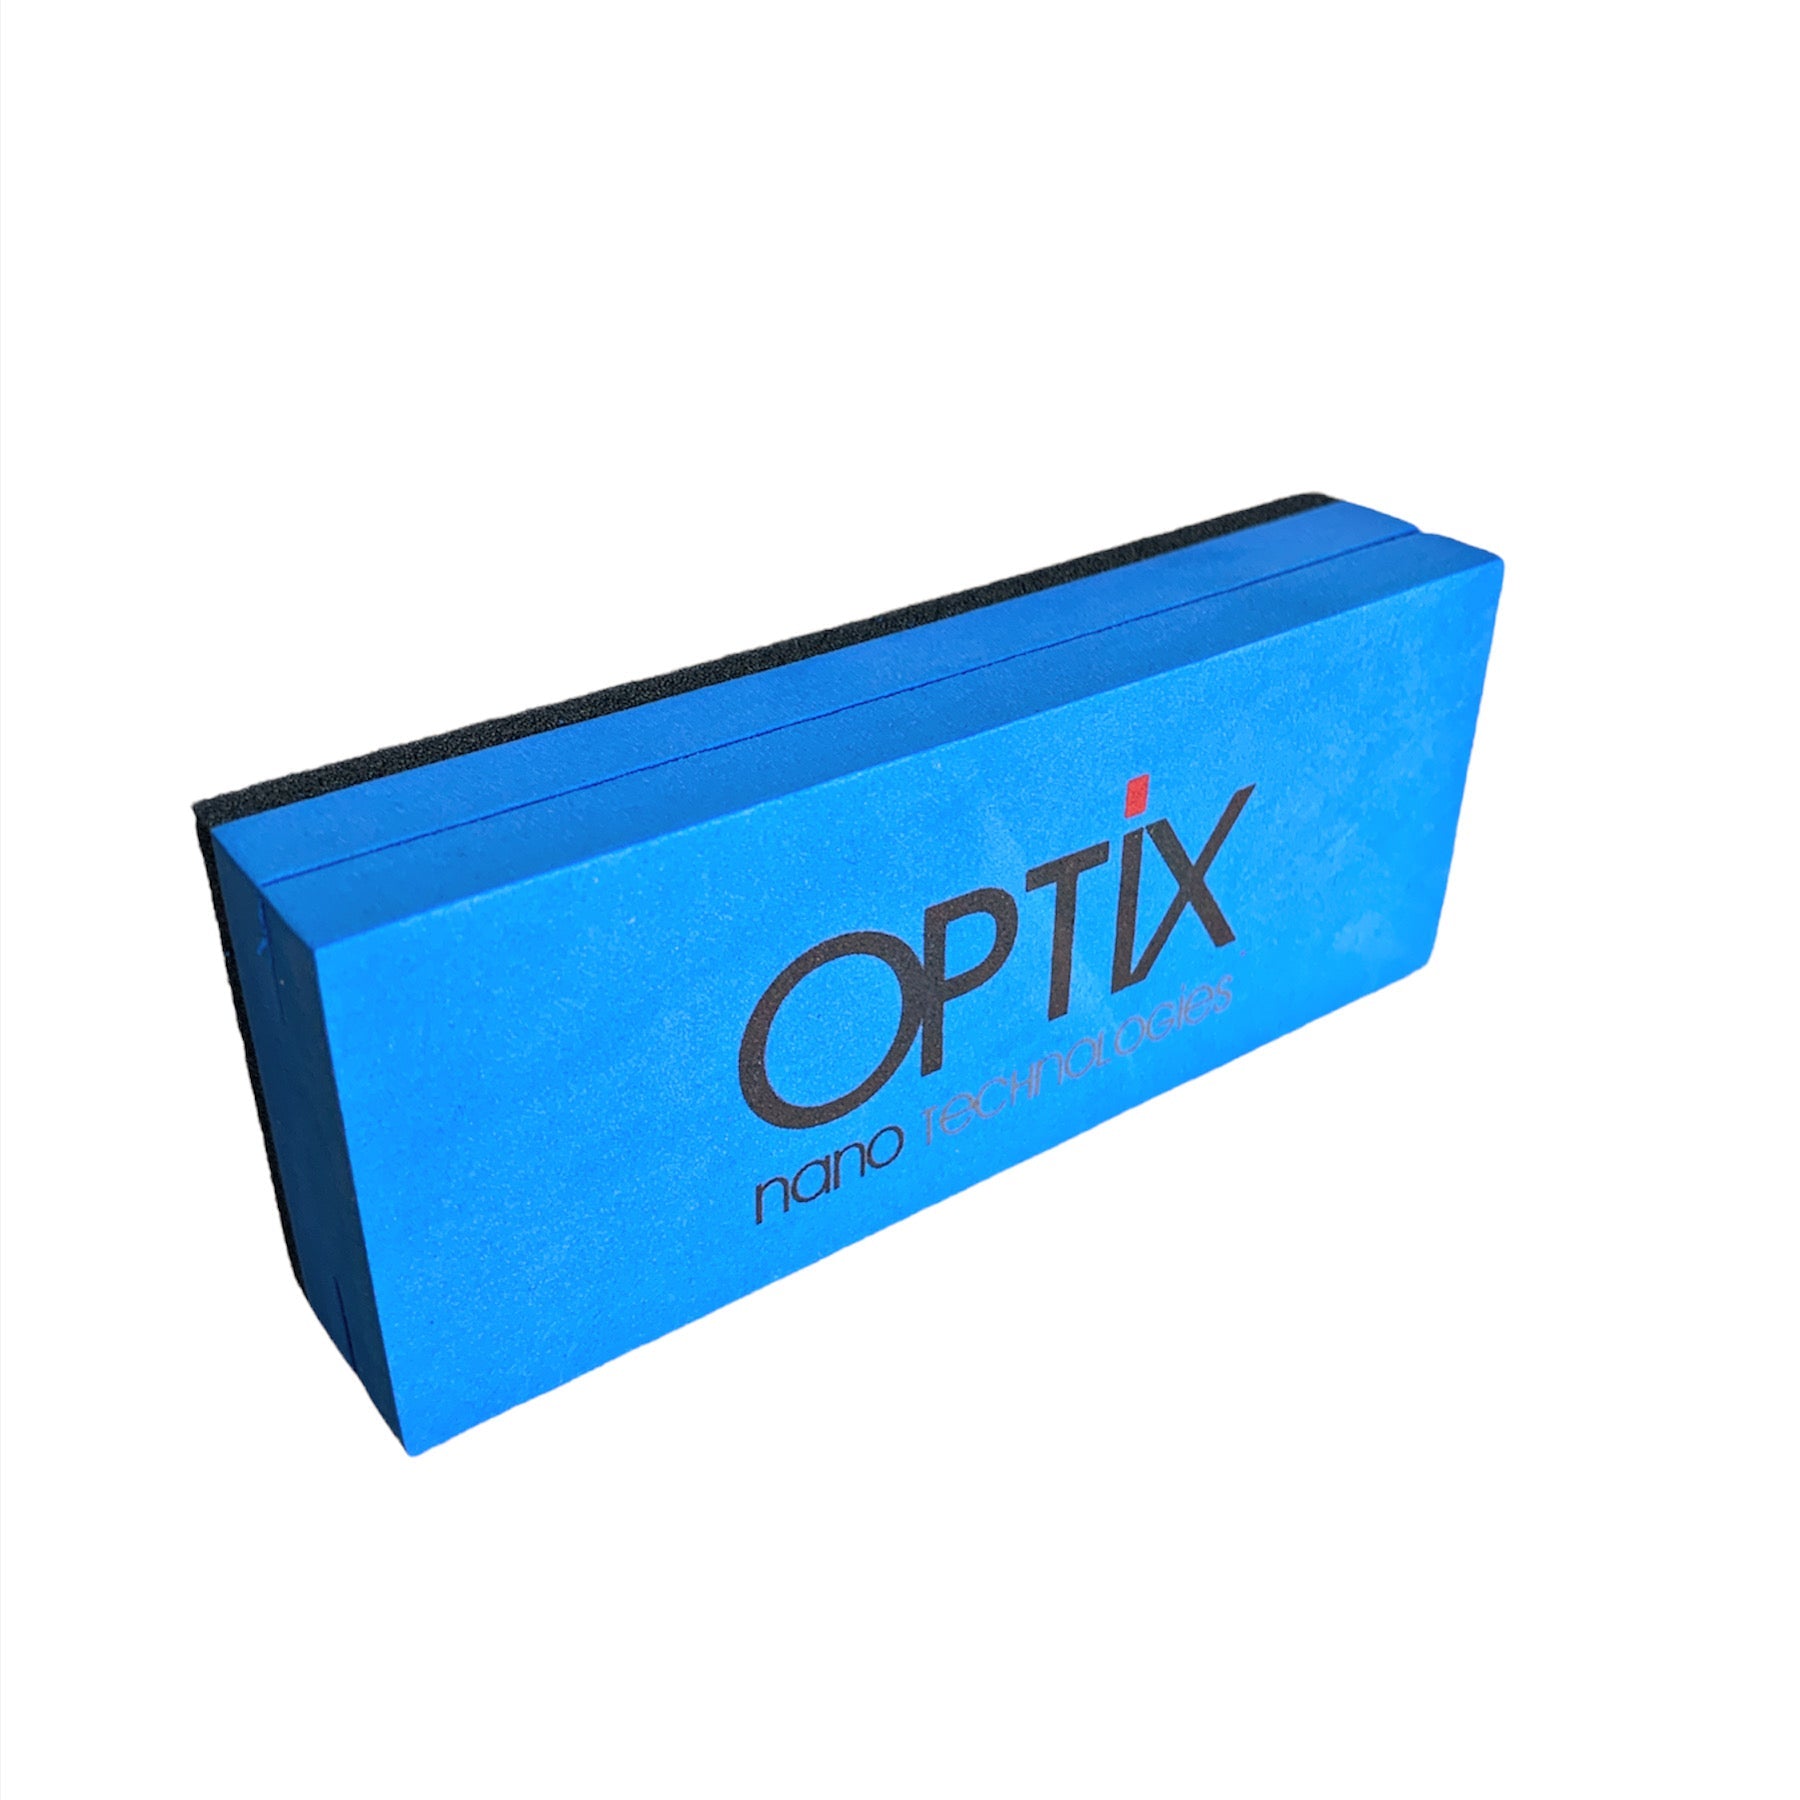 OPTiX Multipurpose Sponge Applicator Pad